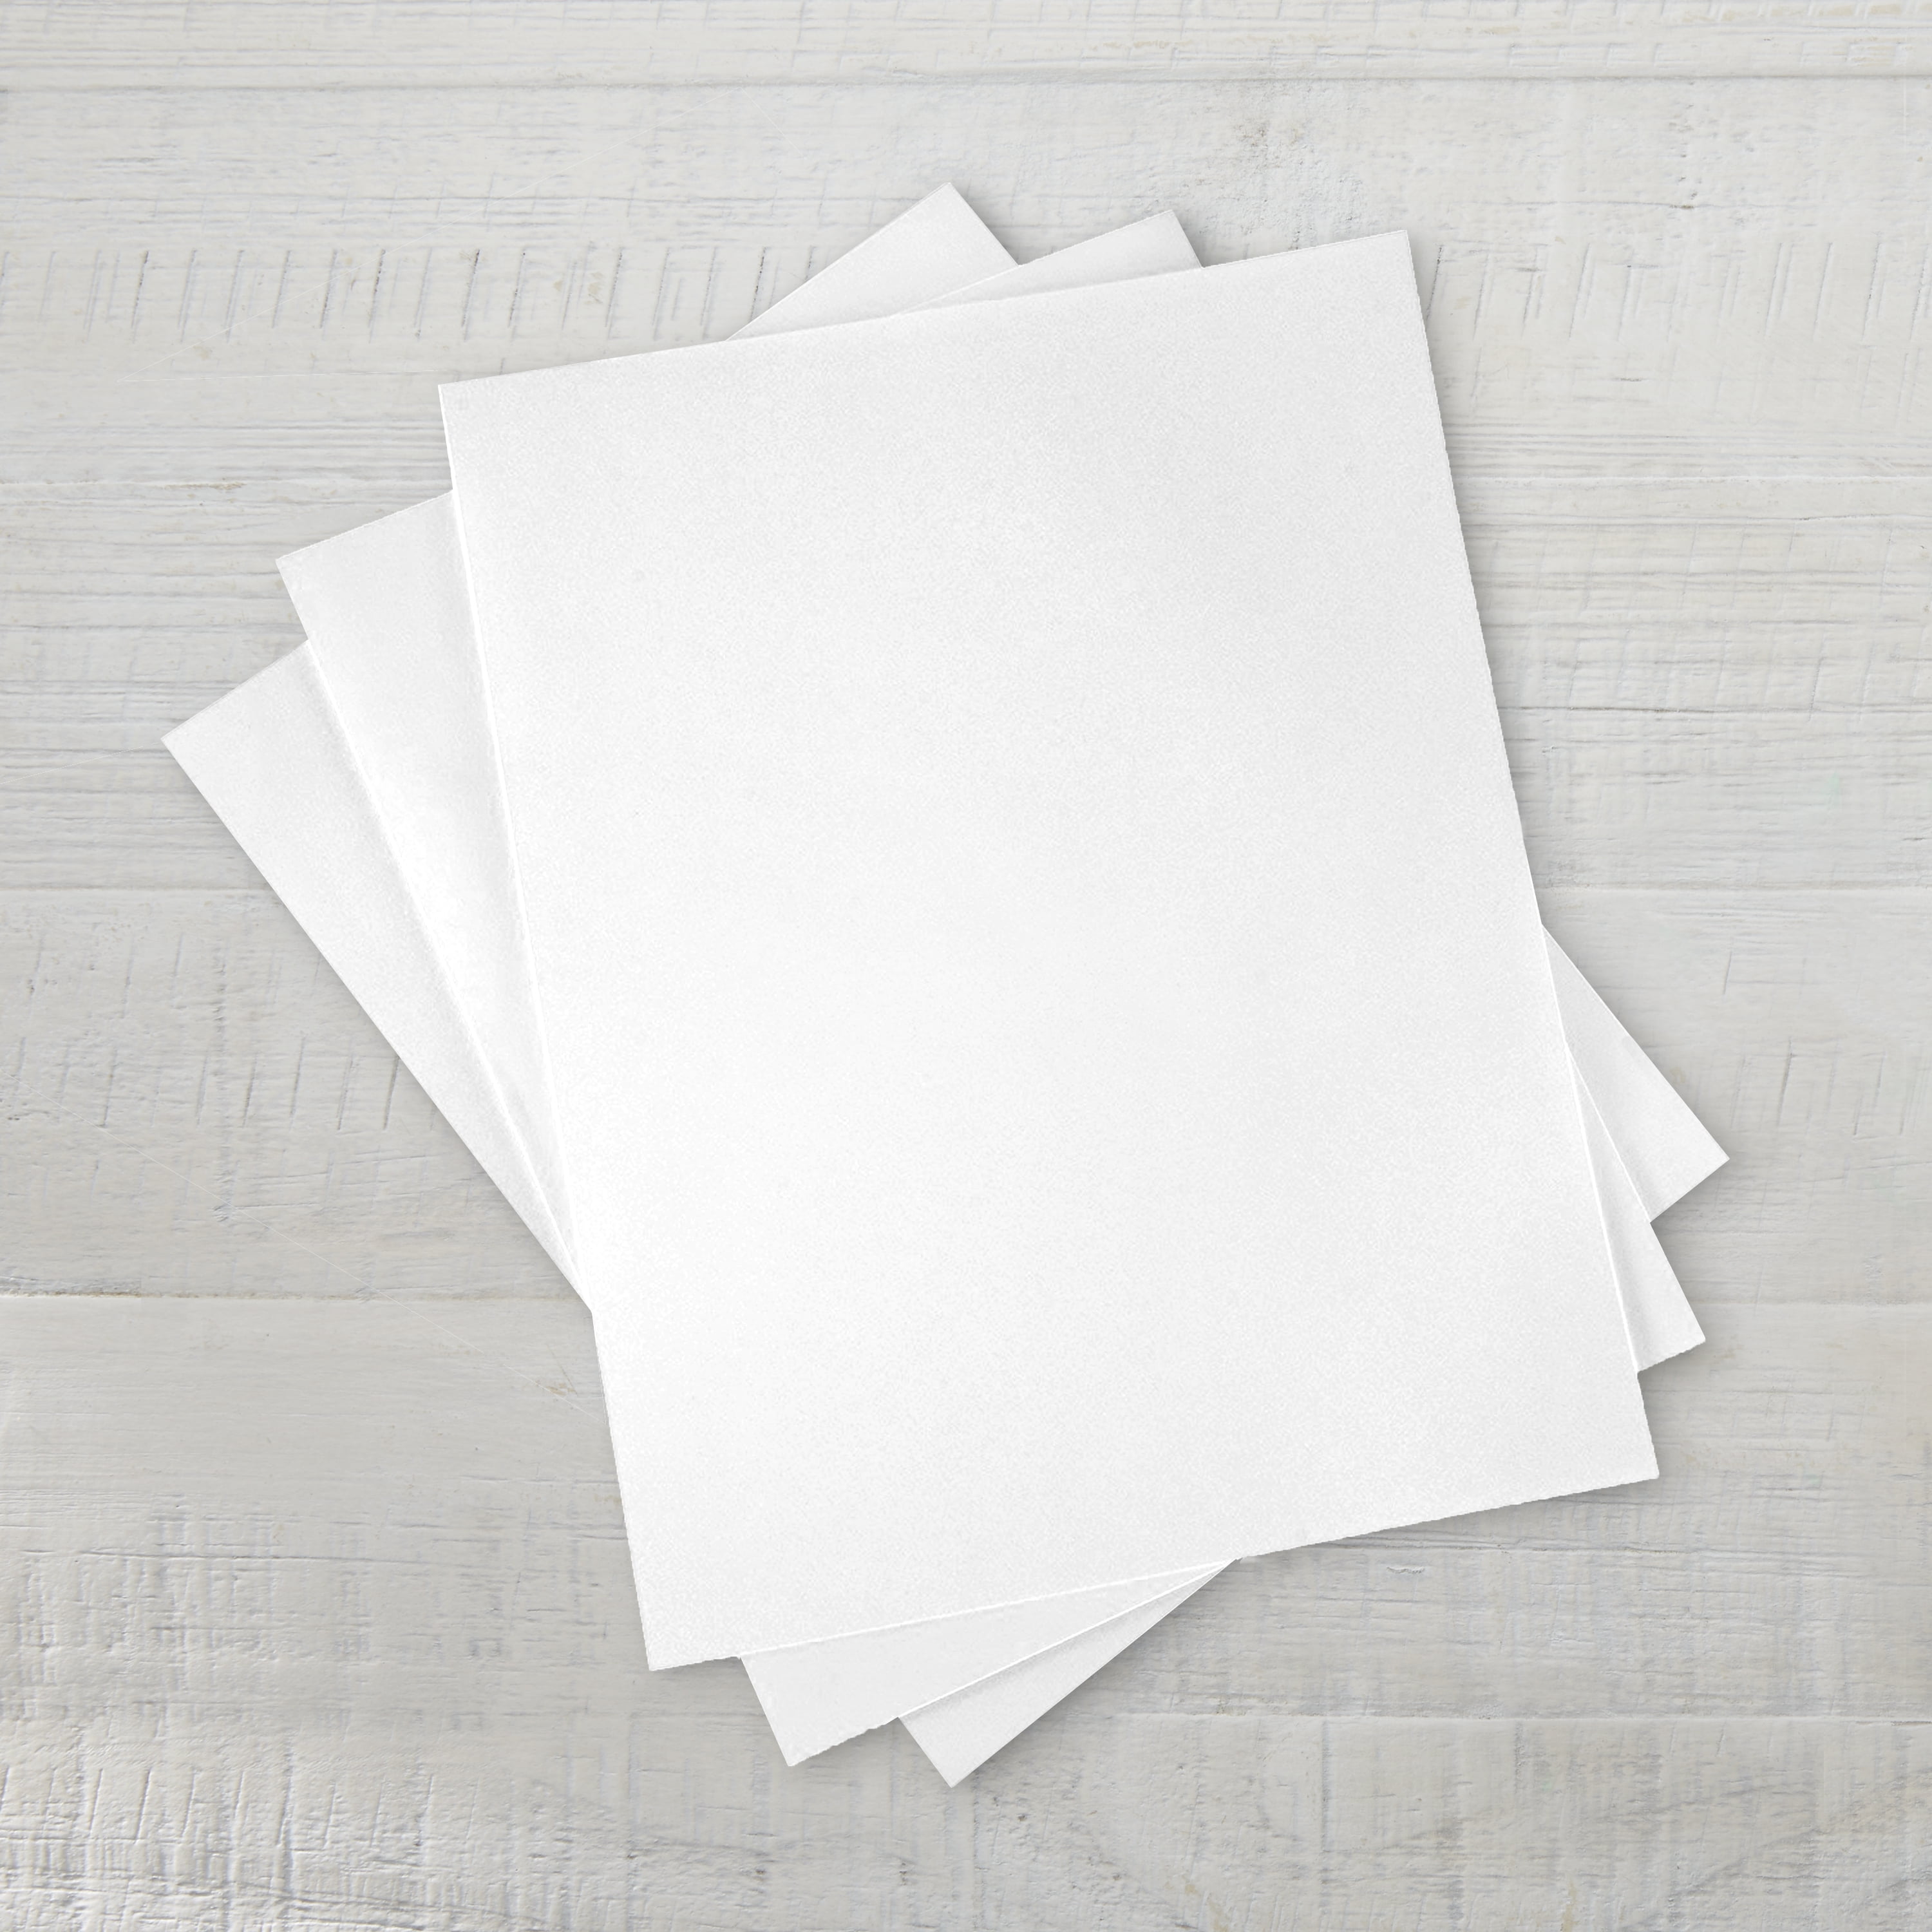 OPTIMUS (92) 8.5 X 11 White Copy Paper - InStock Supplies